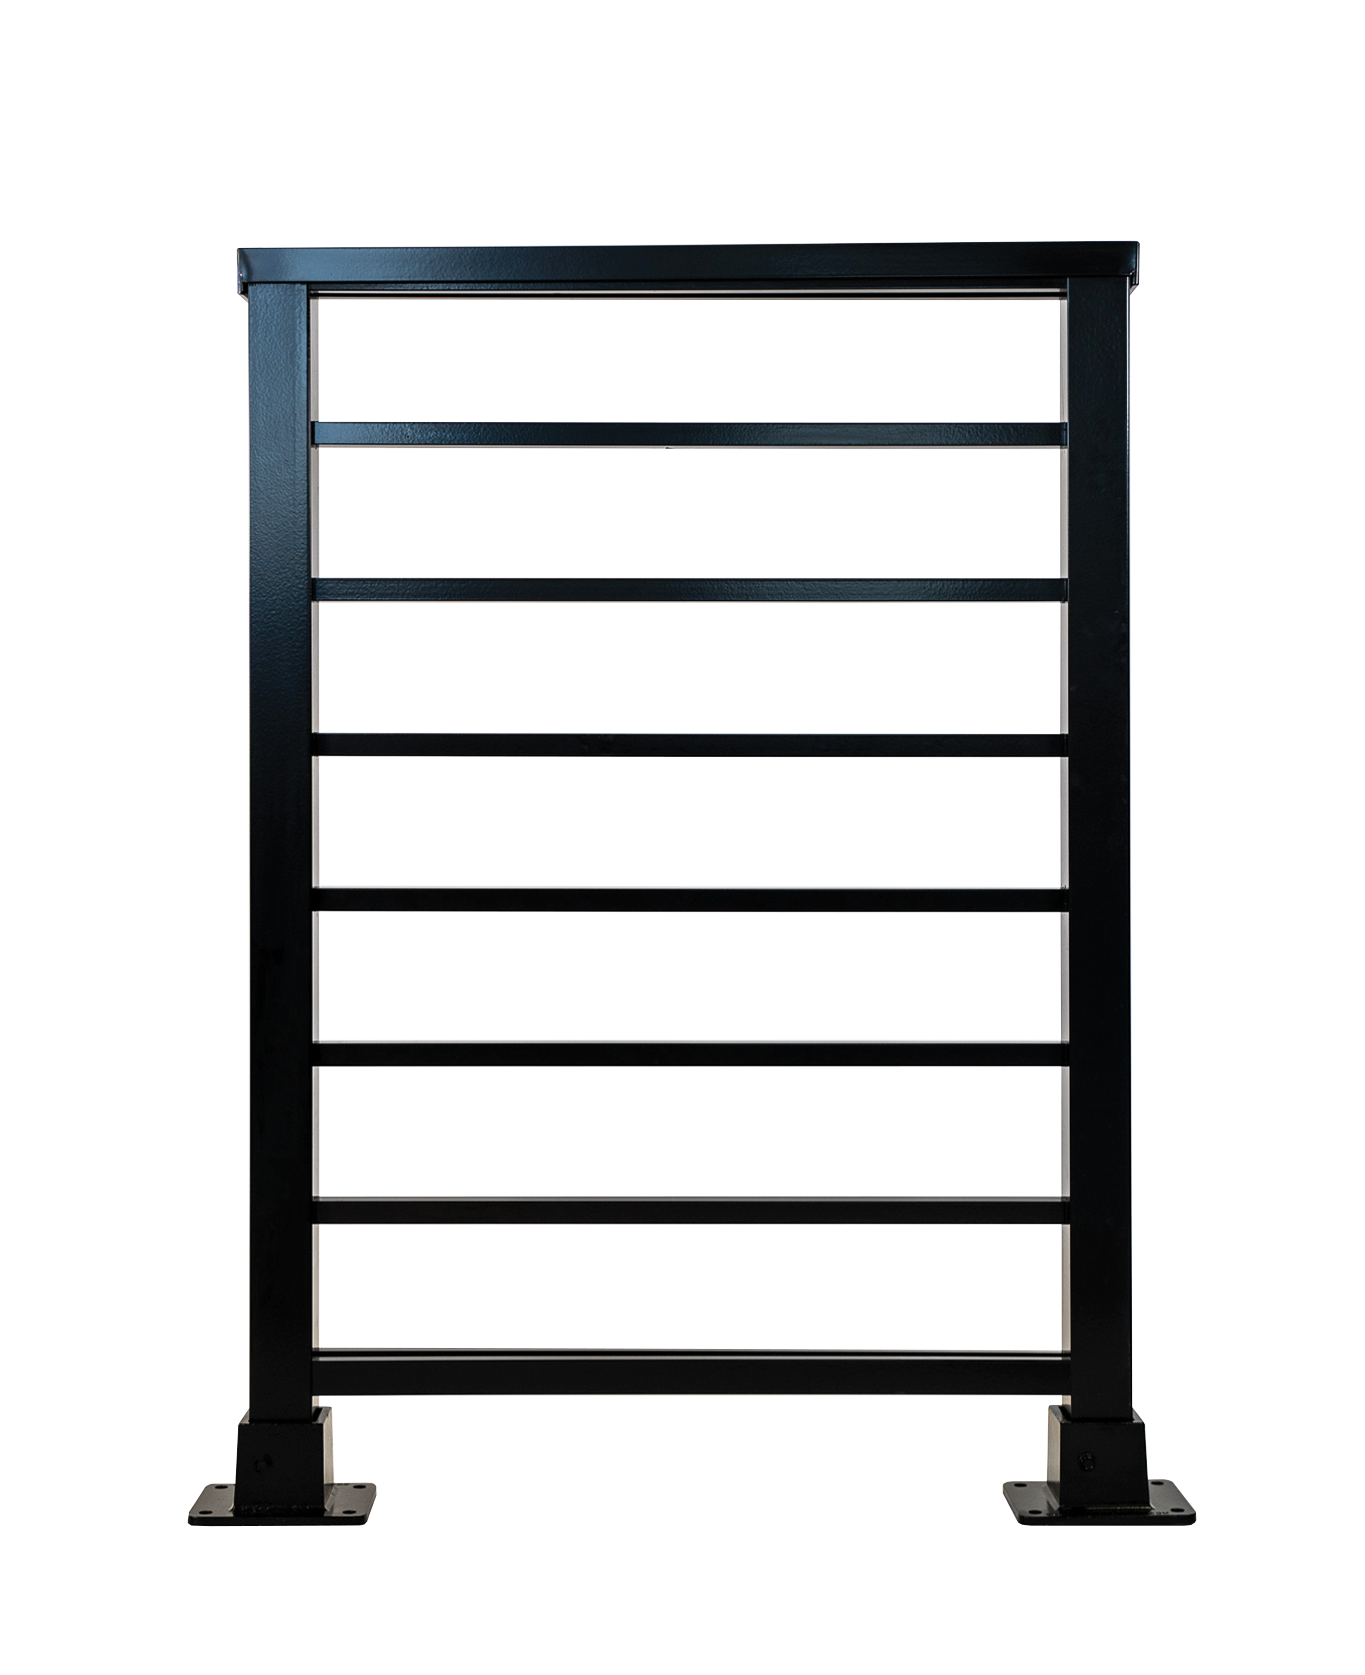 Aluminum Deck railing that is black in color with aluminum horizontal bars, M200 3H